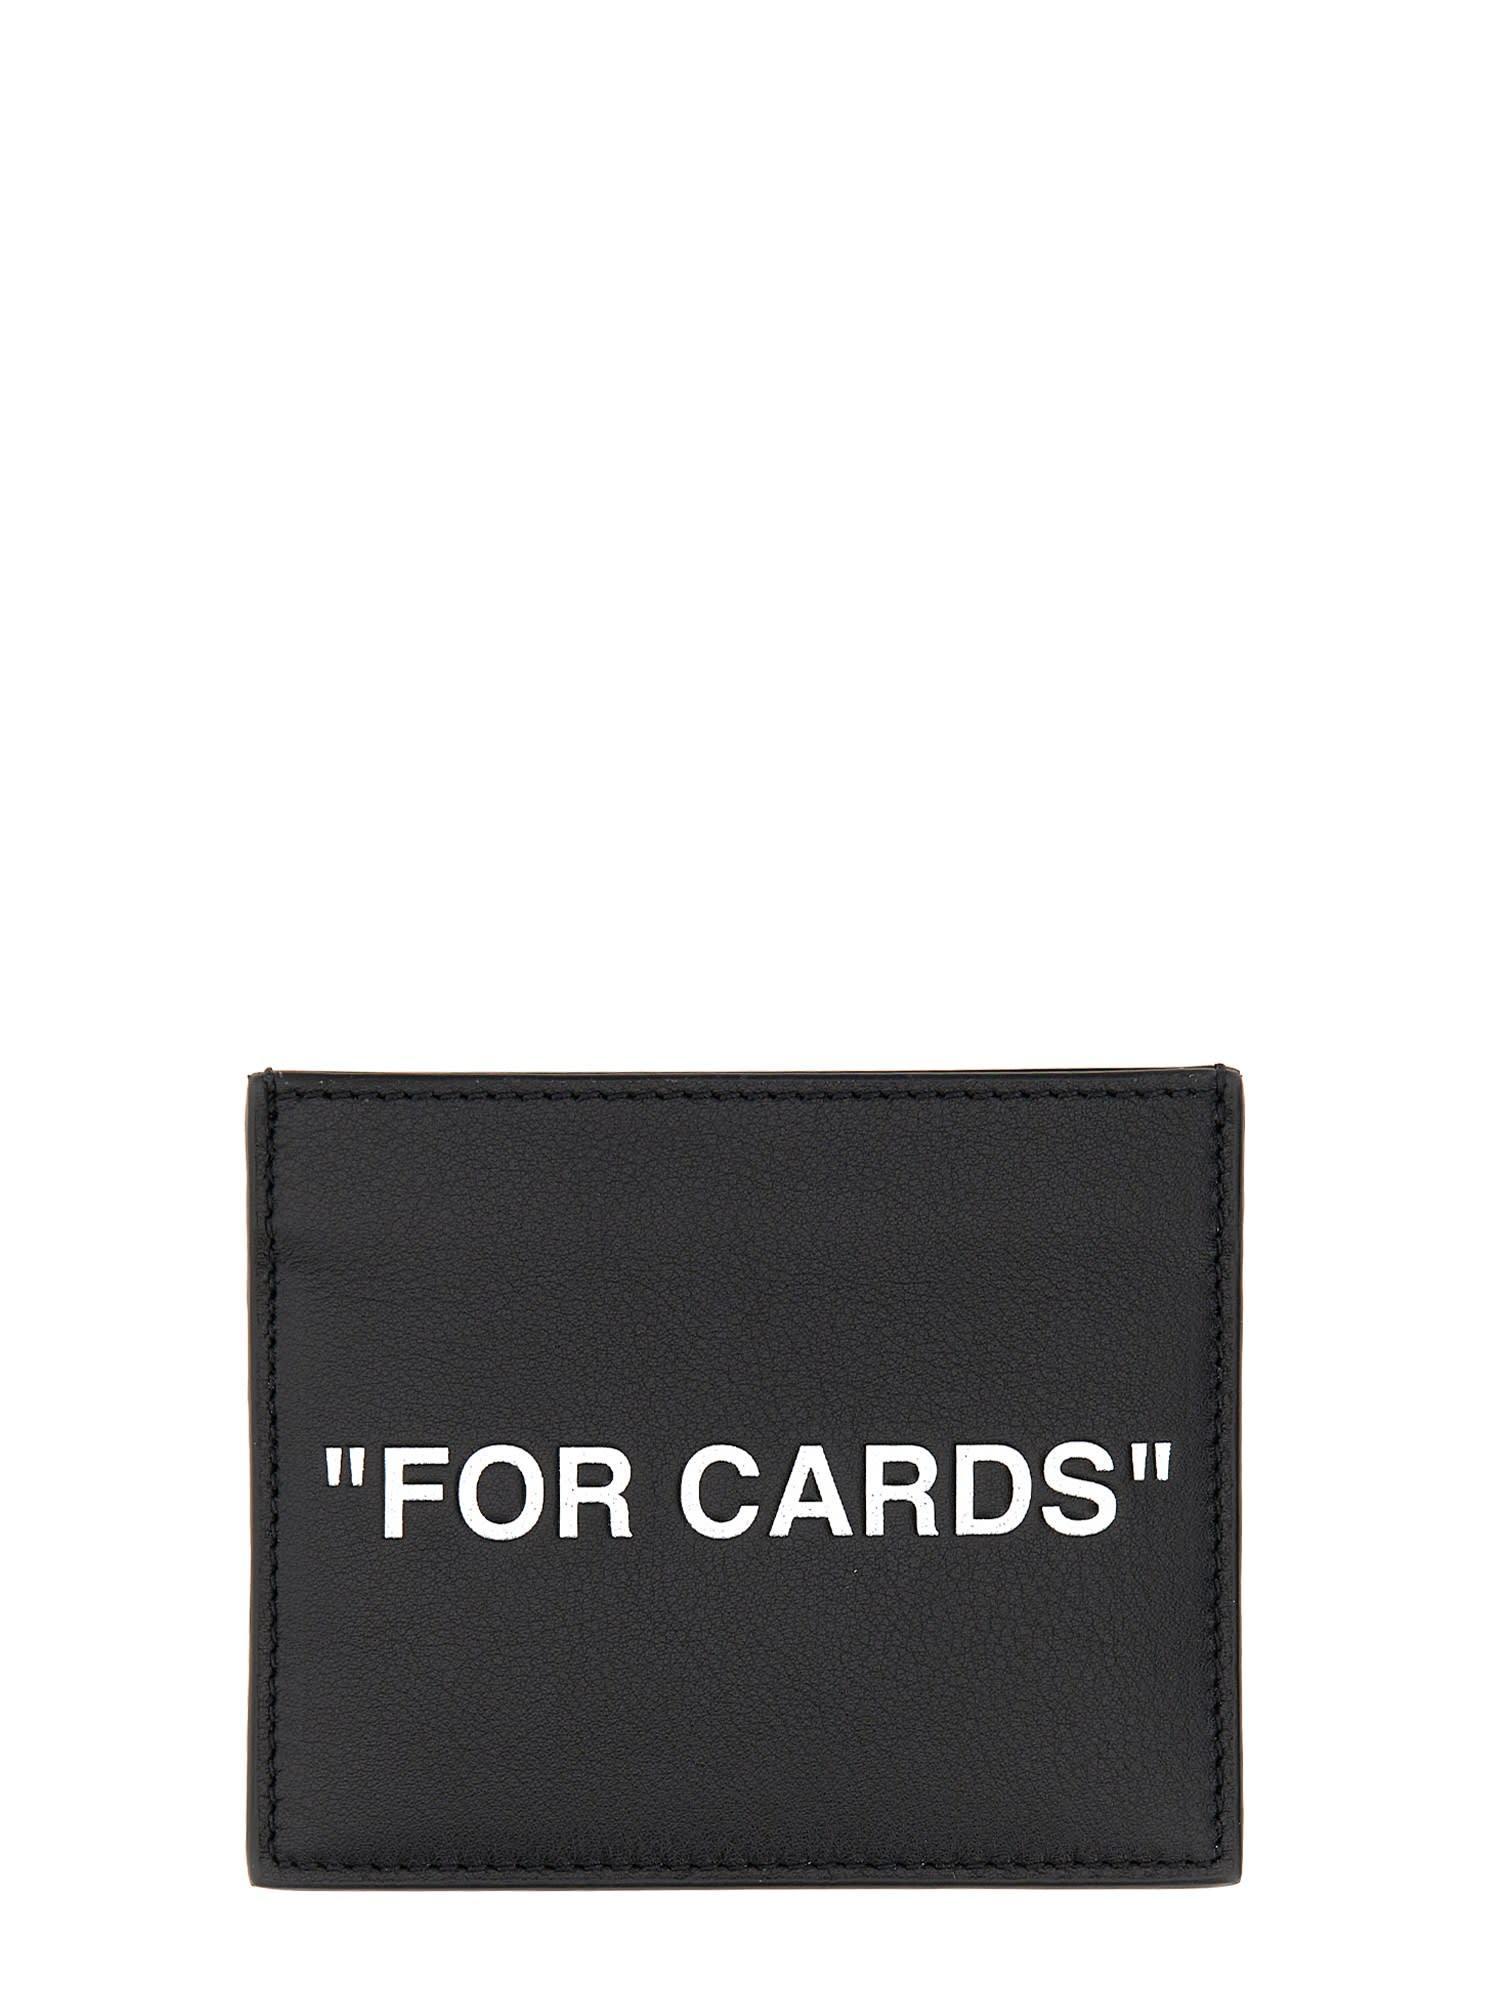 Off-White c/o Virgil Abloh Leather Card Holder in Natural